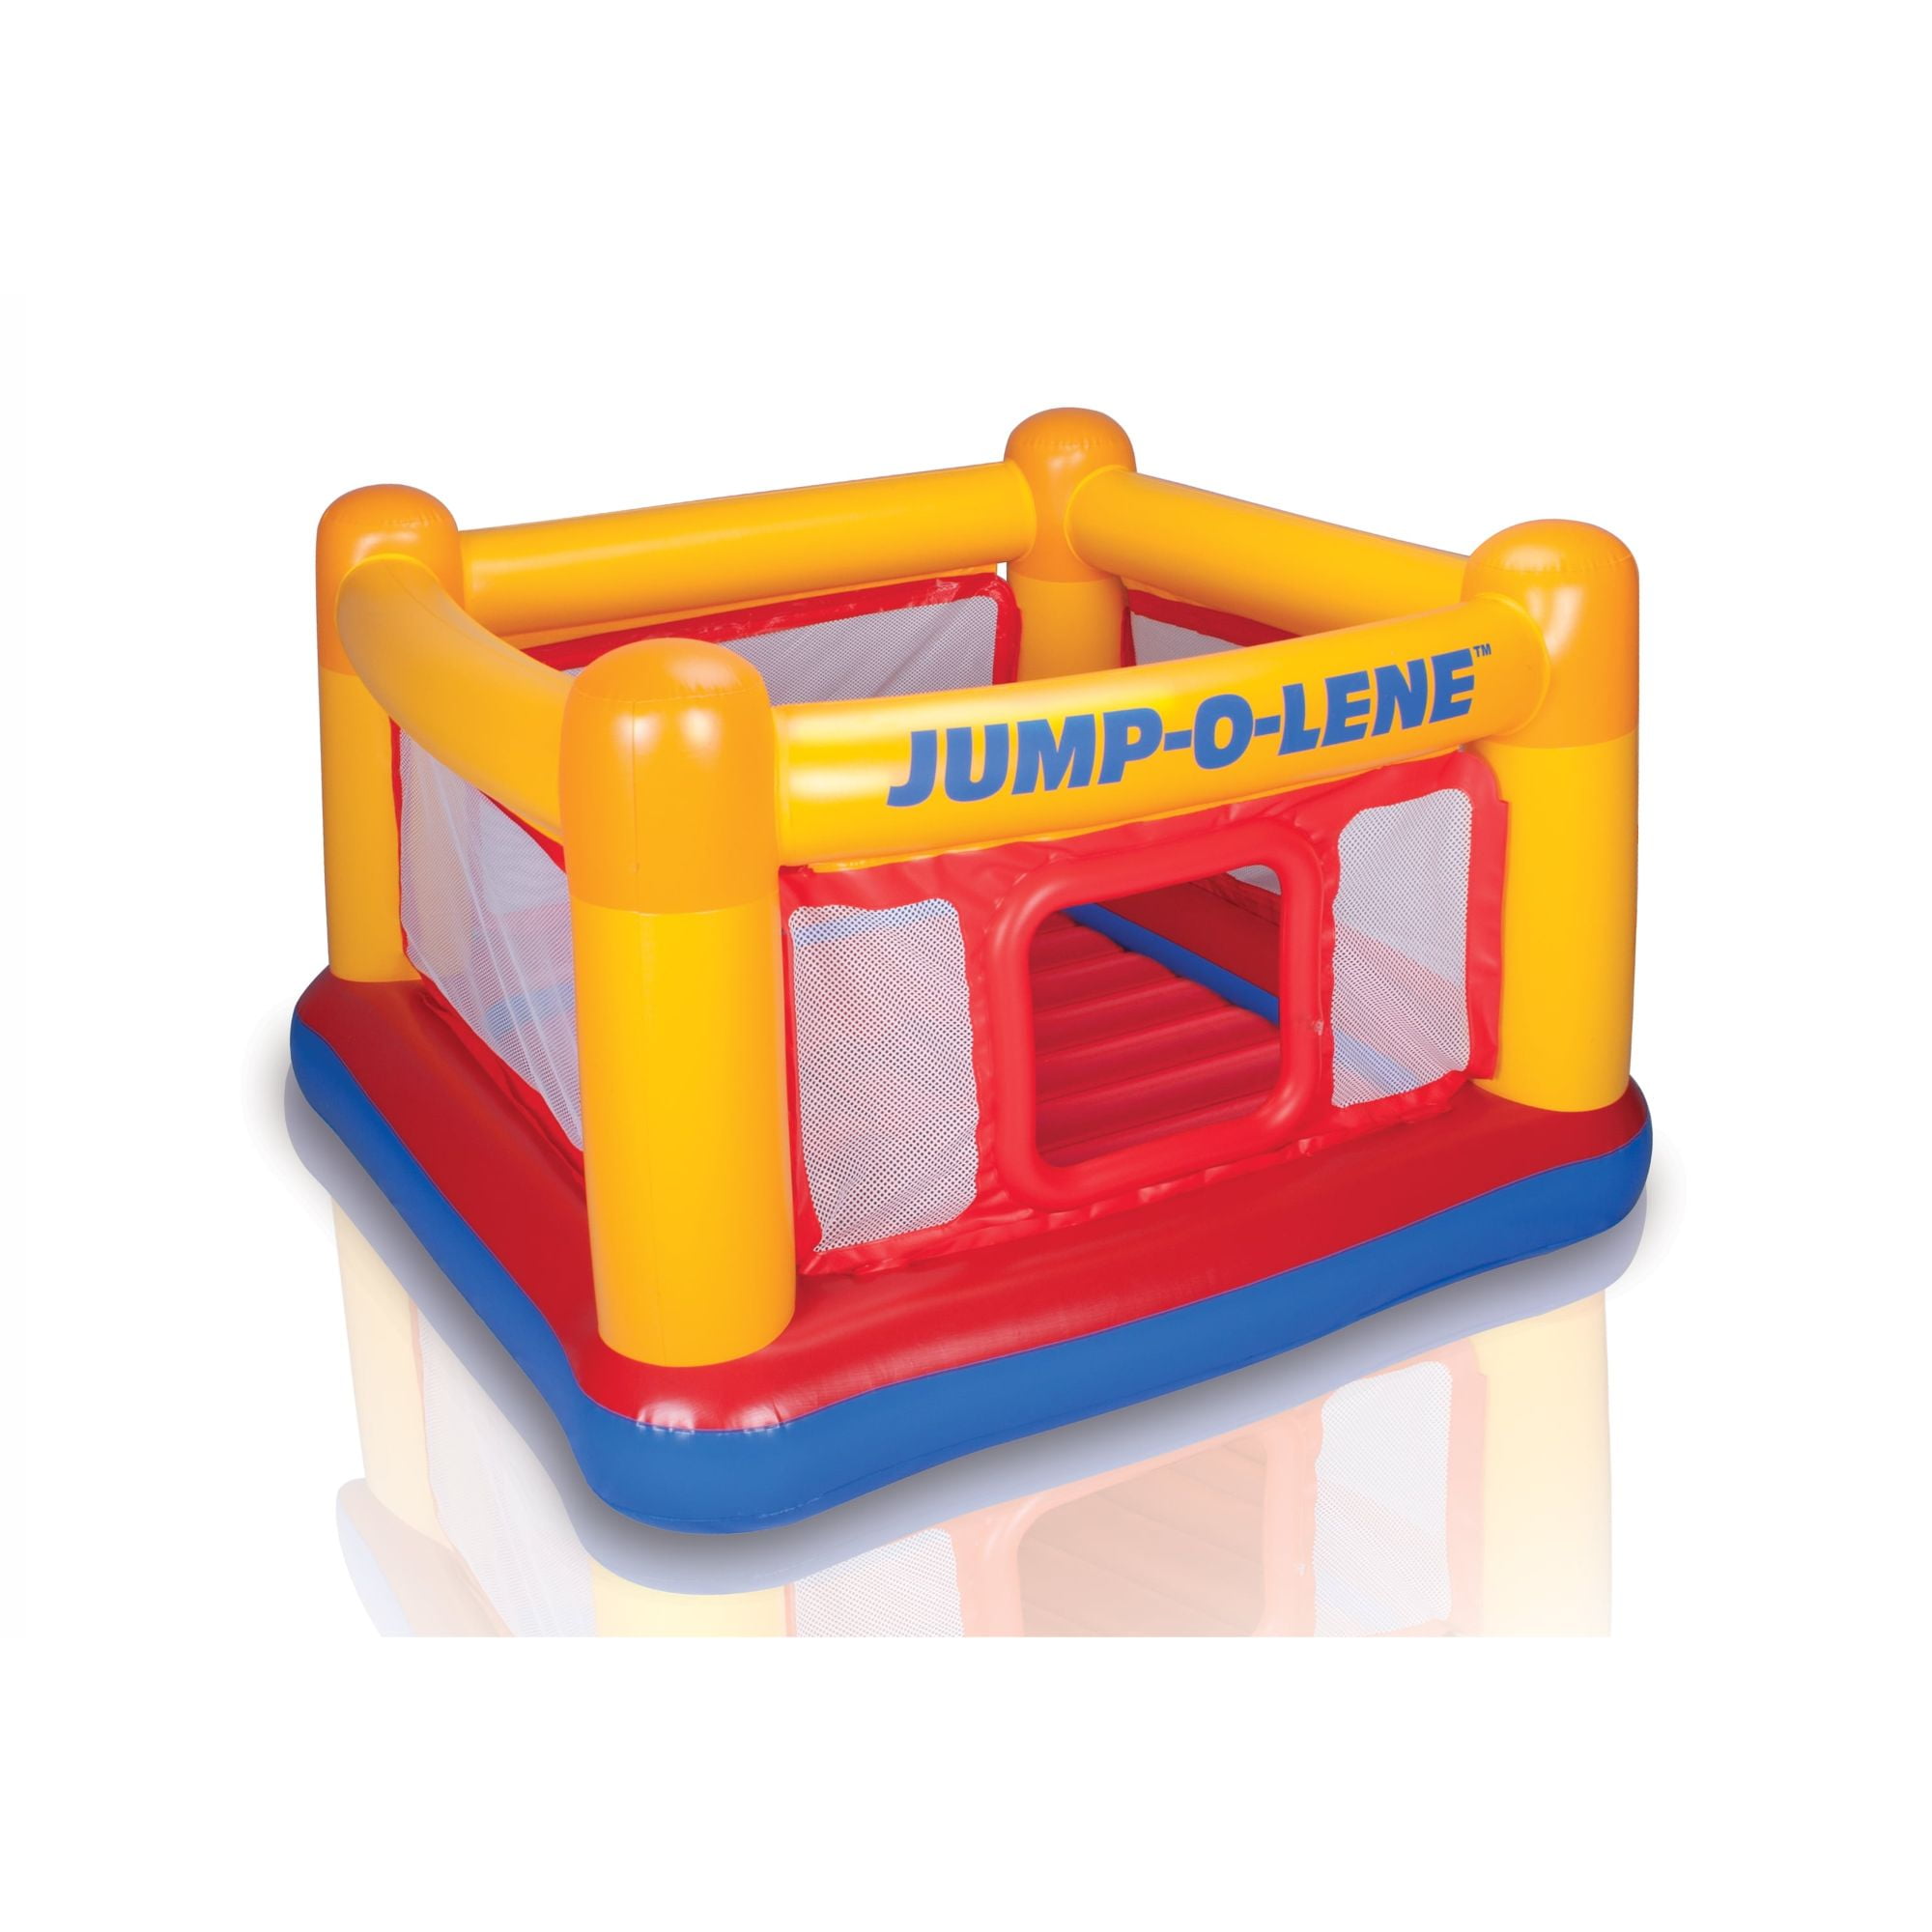 Intex 48260EP Inflatable Jump-O-Lene Play House Bouncer for sale online 